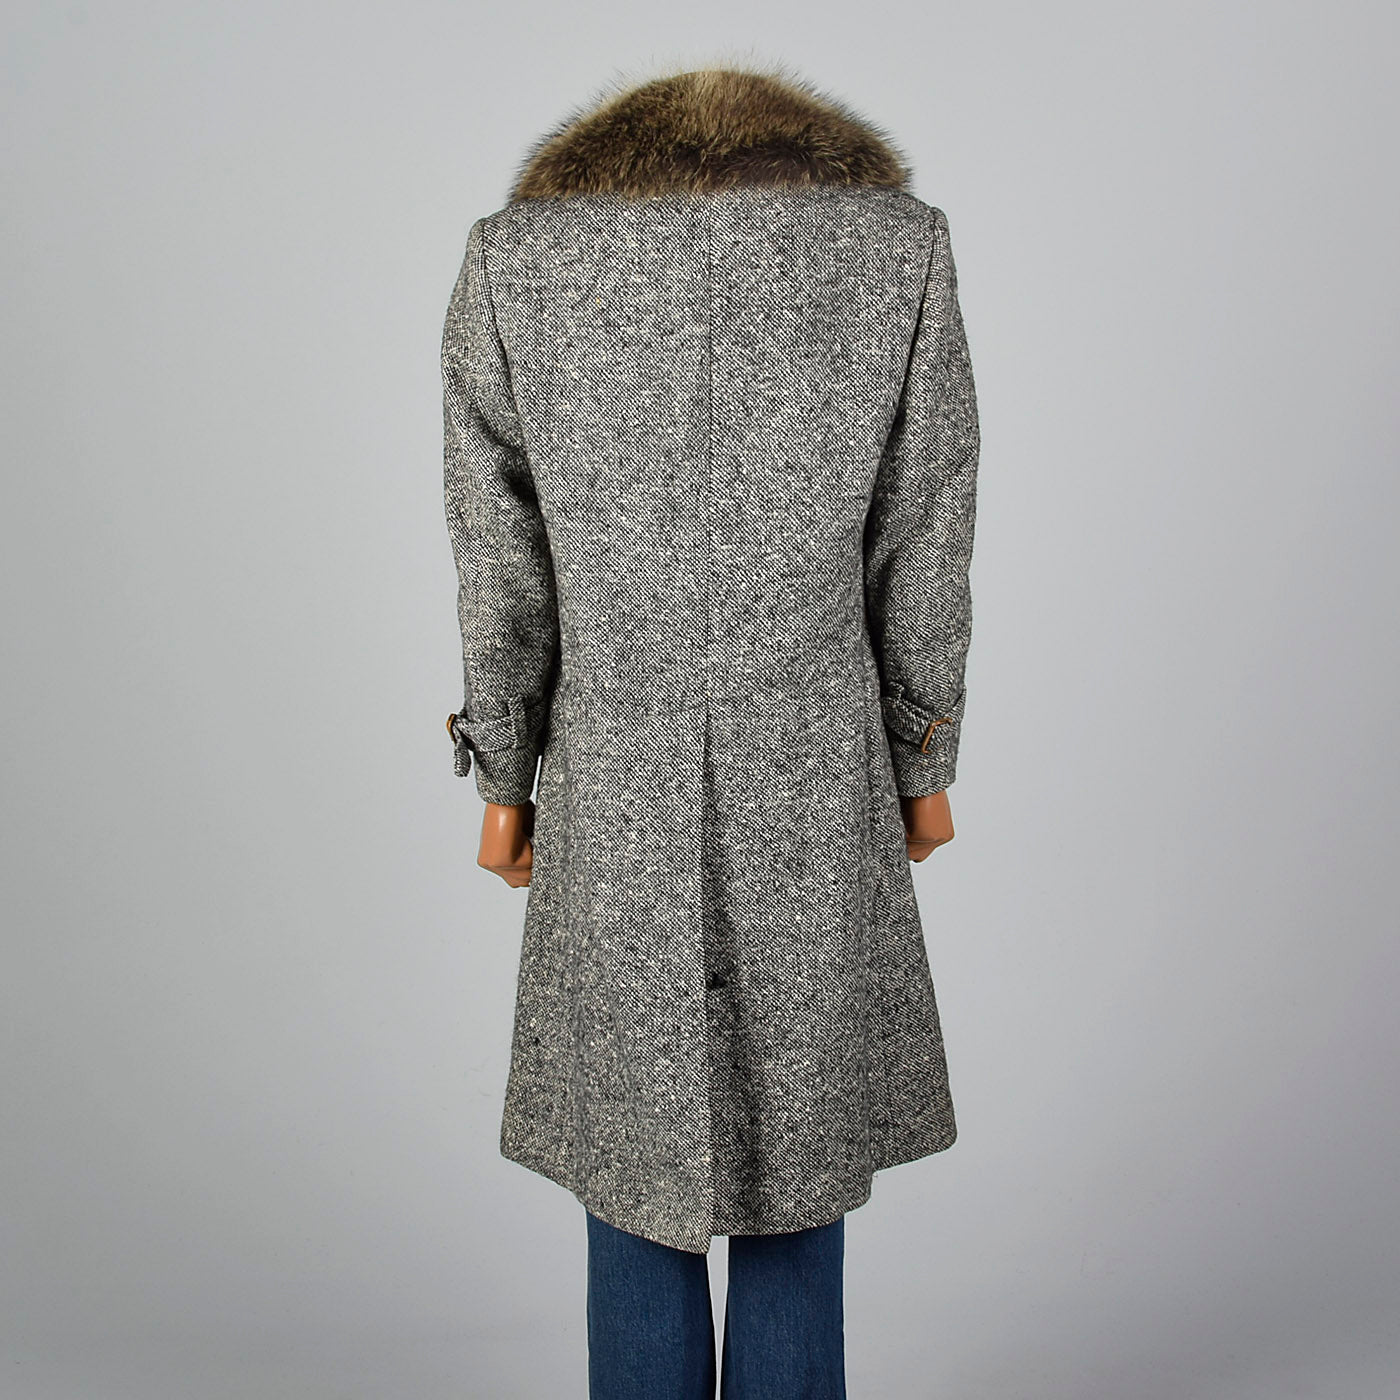 1970s Mens Wool Tweed Coat with Raccoon Fur Collar